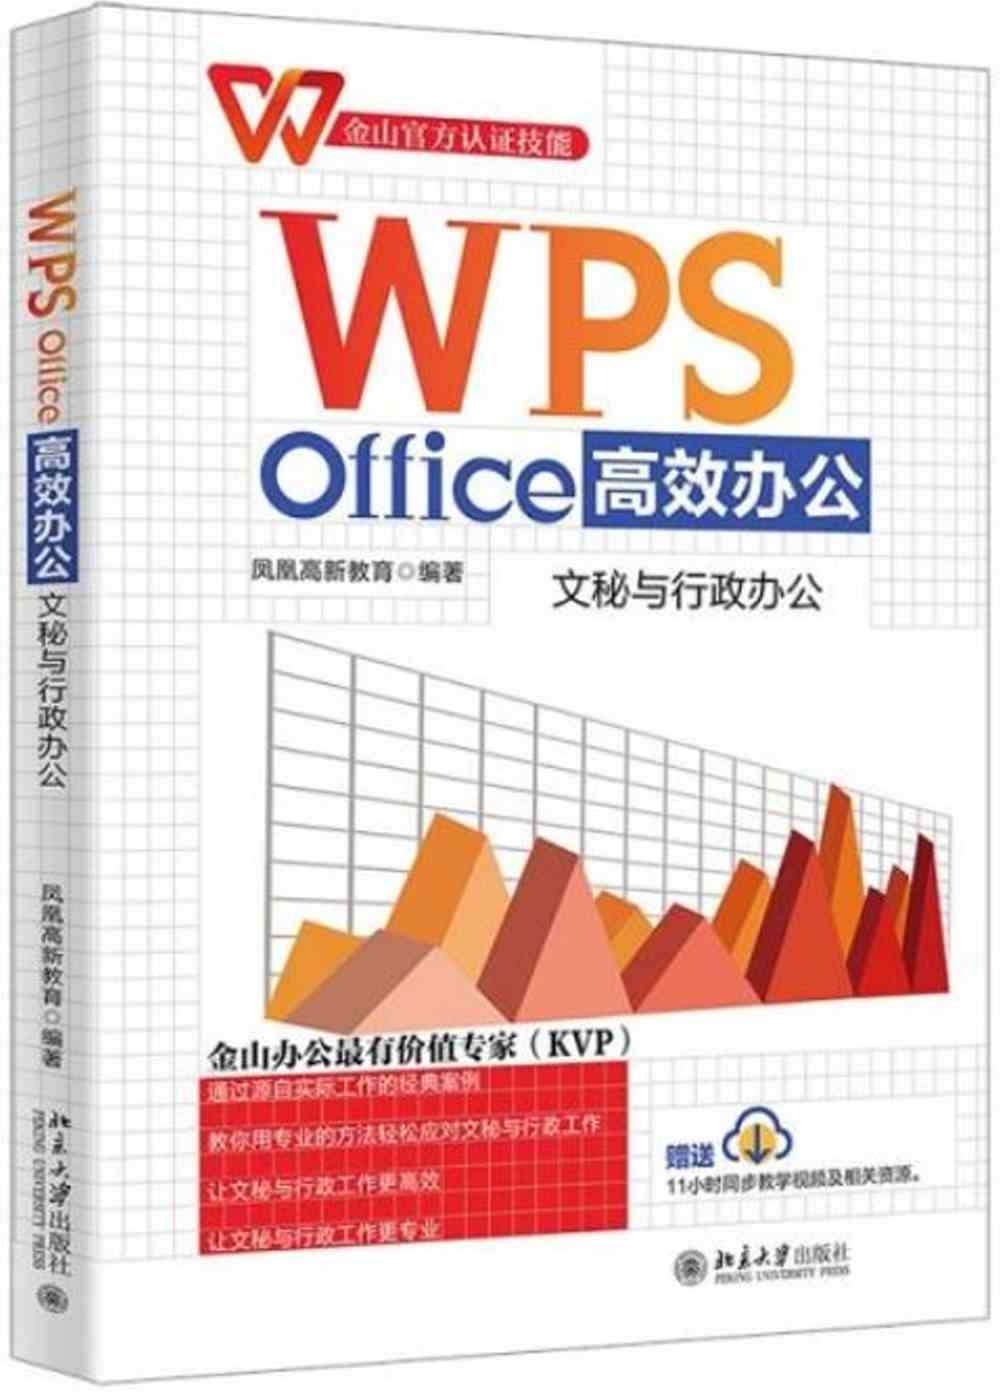 WPS Office高效辦公：文秘與行政辦公